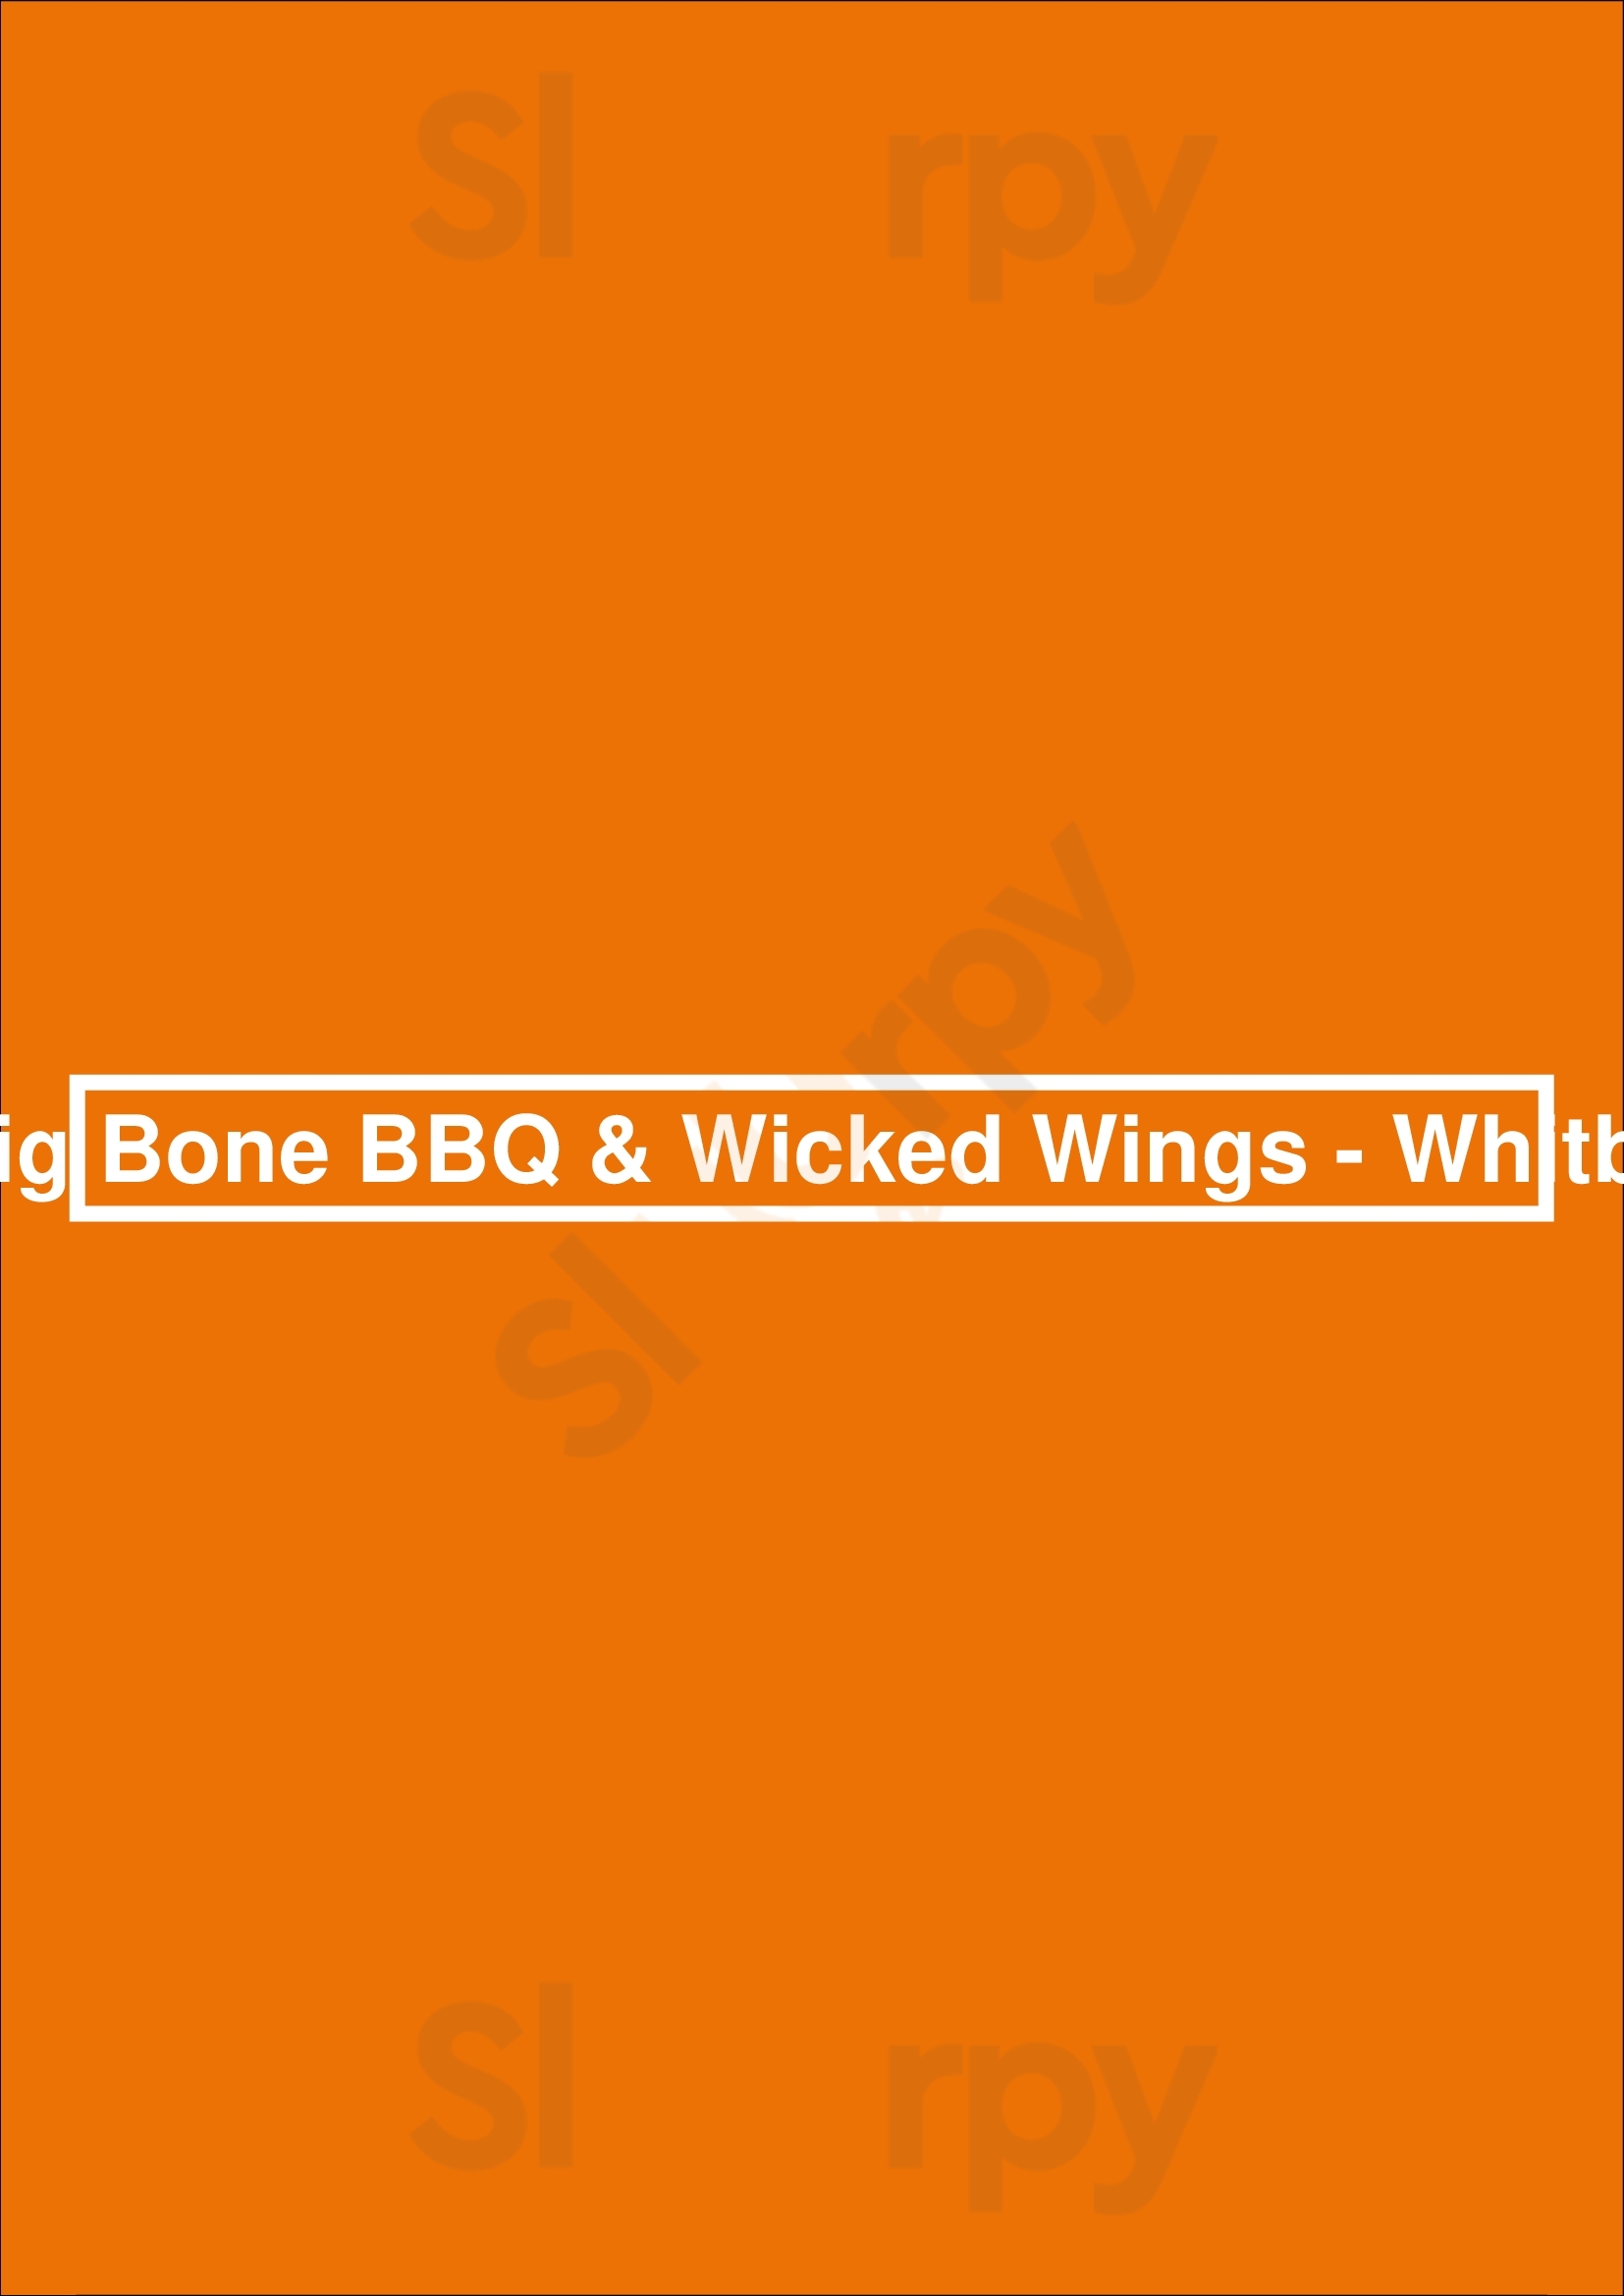 Big Bone Bbq & Wicked Wings - Whitby Whitby Menu - 1